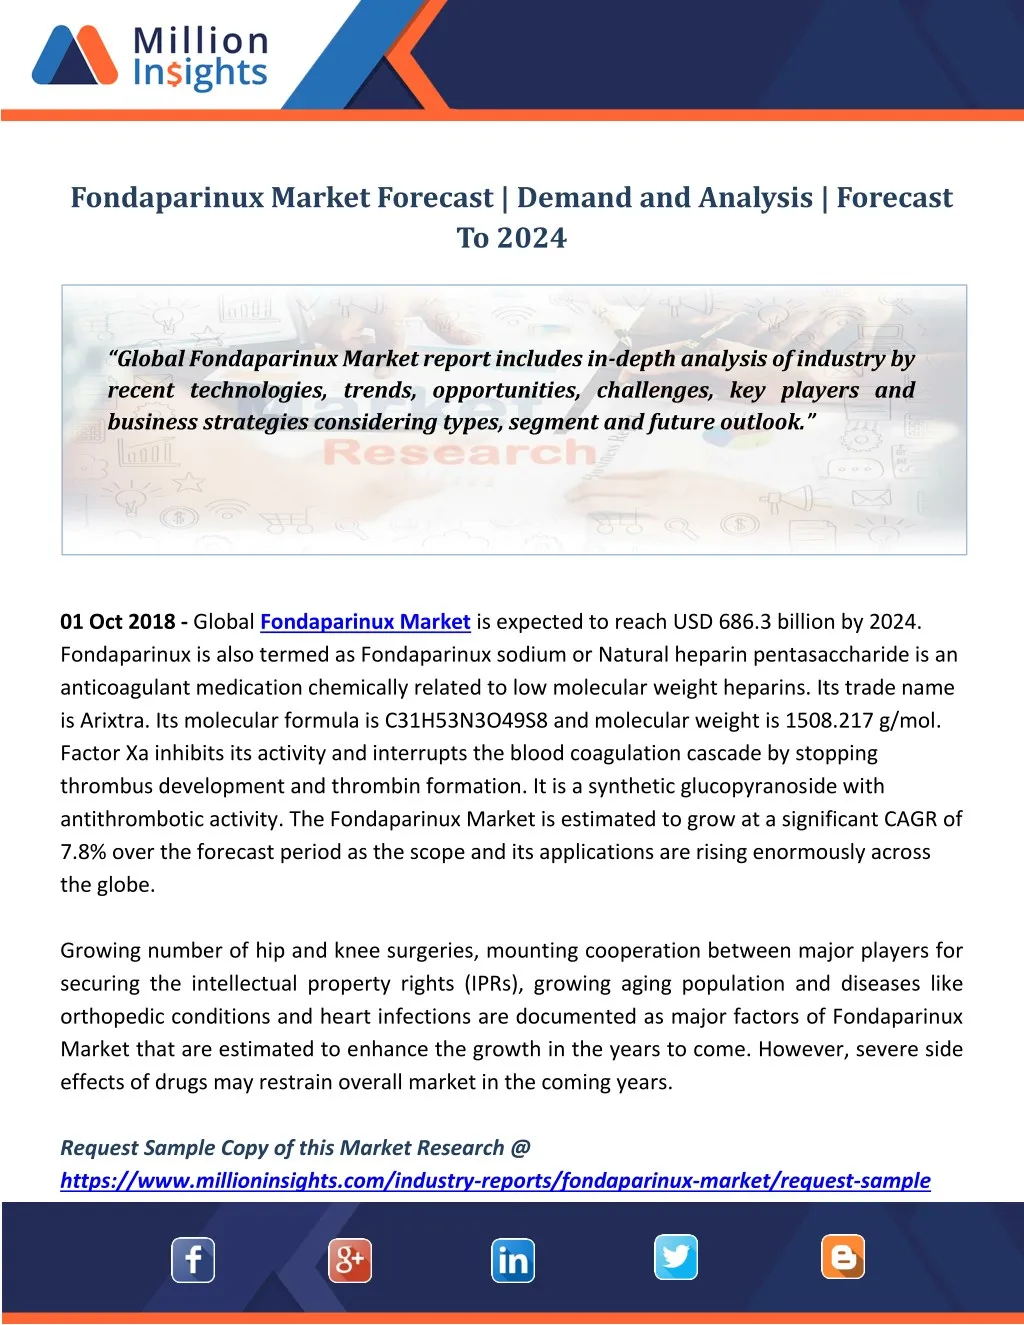 fondaparinux market forecast demand and analysis